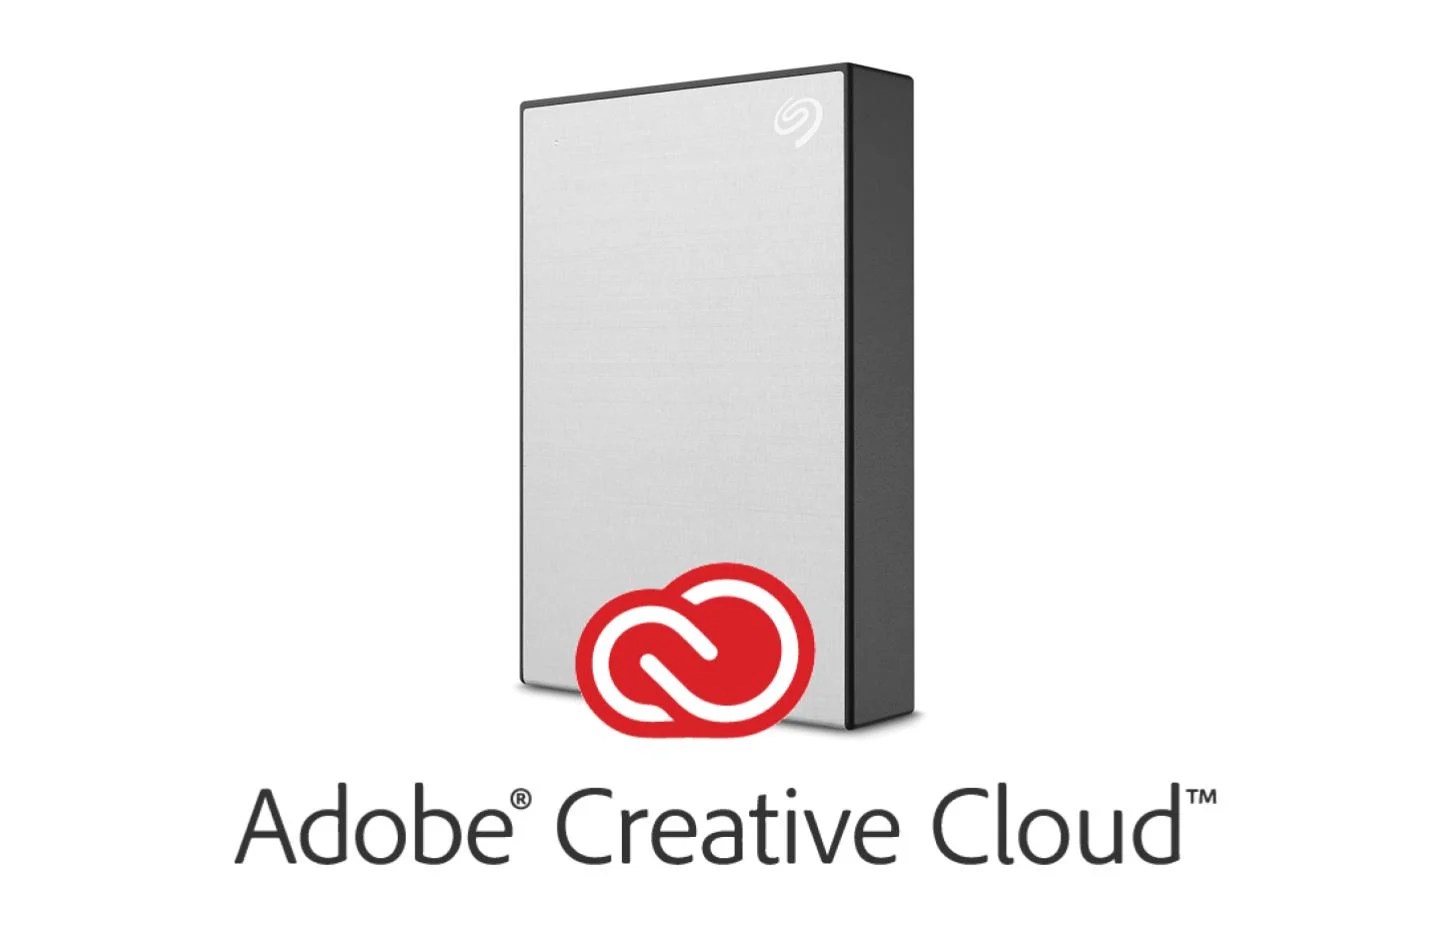 89 € pour ce HDD externe 4 To + 4 mois offerts à Adobe Creative Cloud